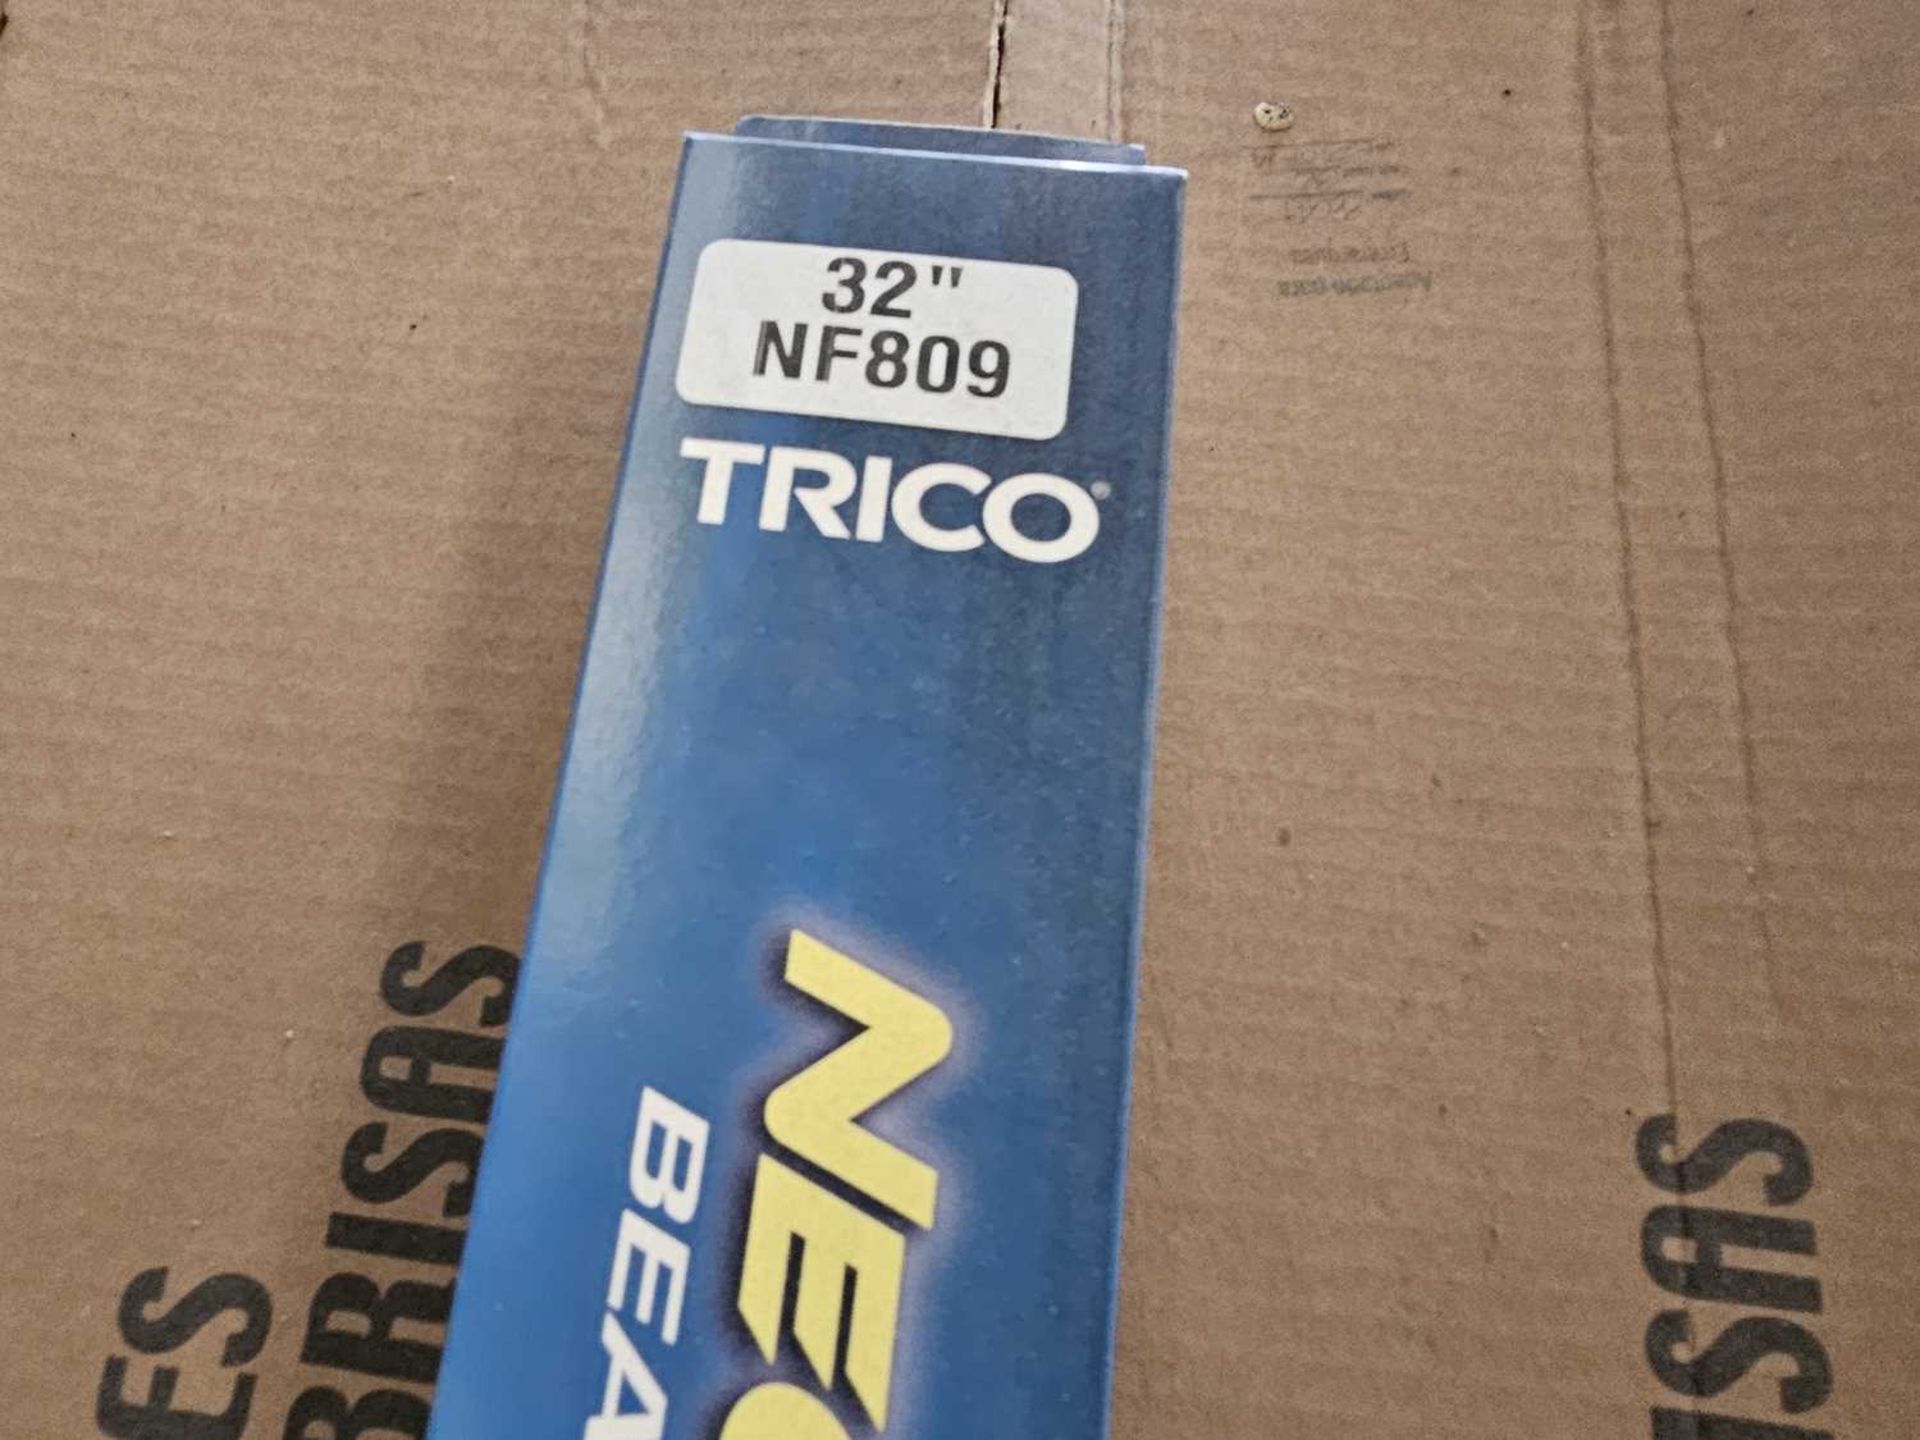 Unused Pallet of Trico NF809 Window Wiper (32") - Image 2 of 3